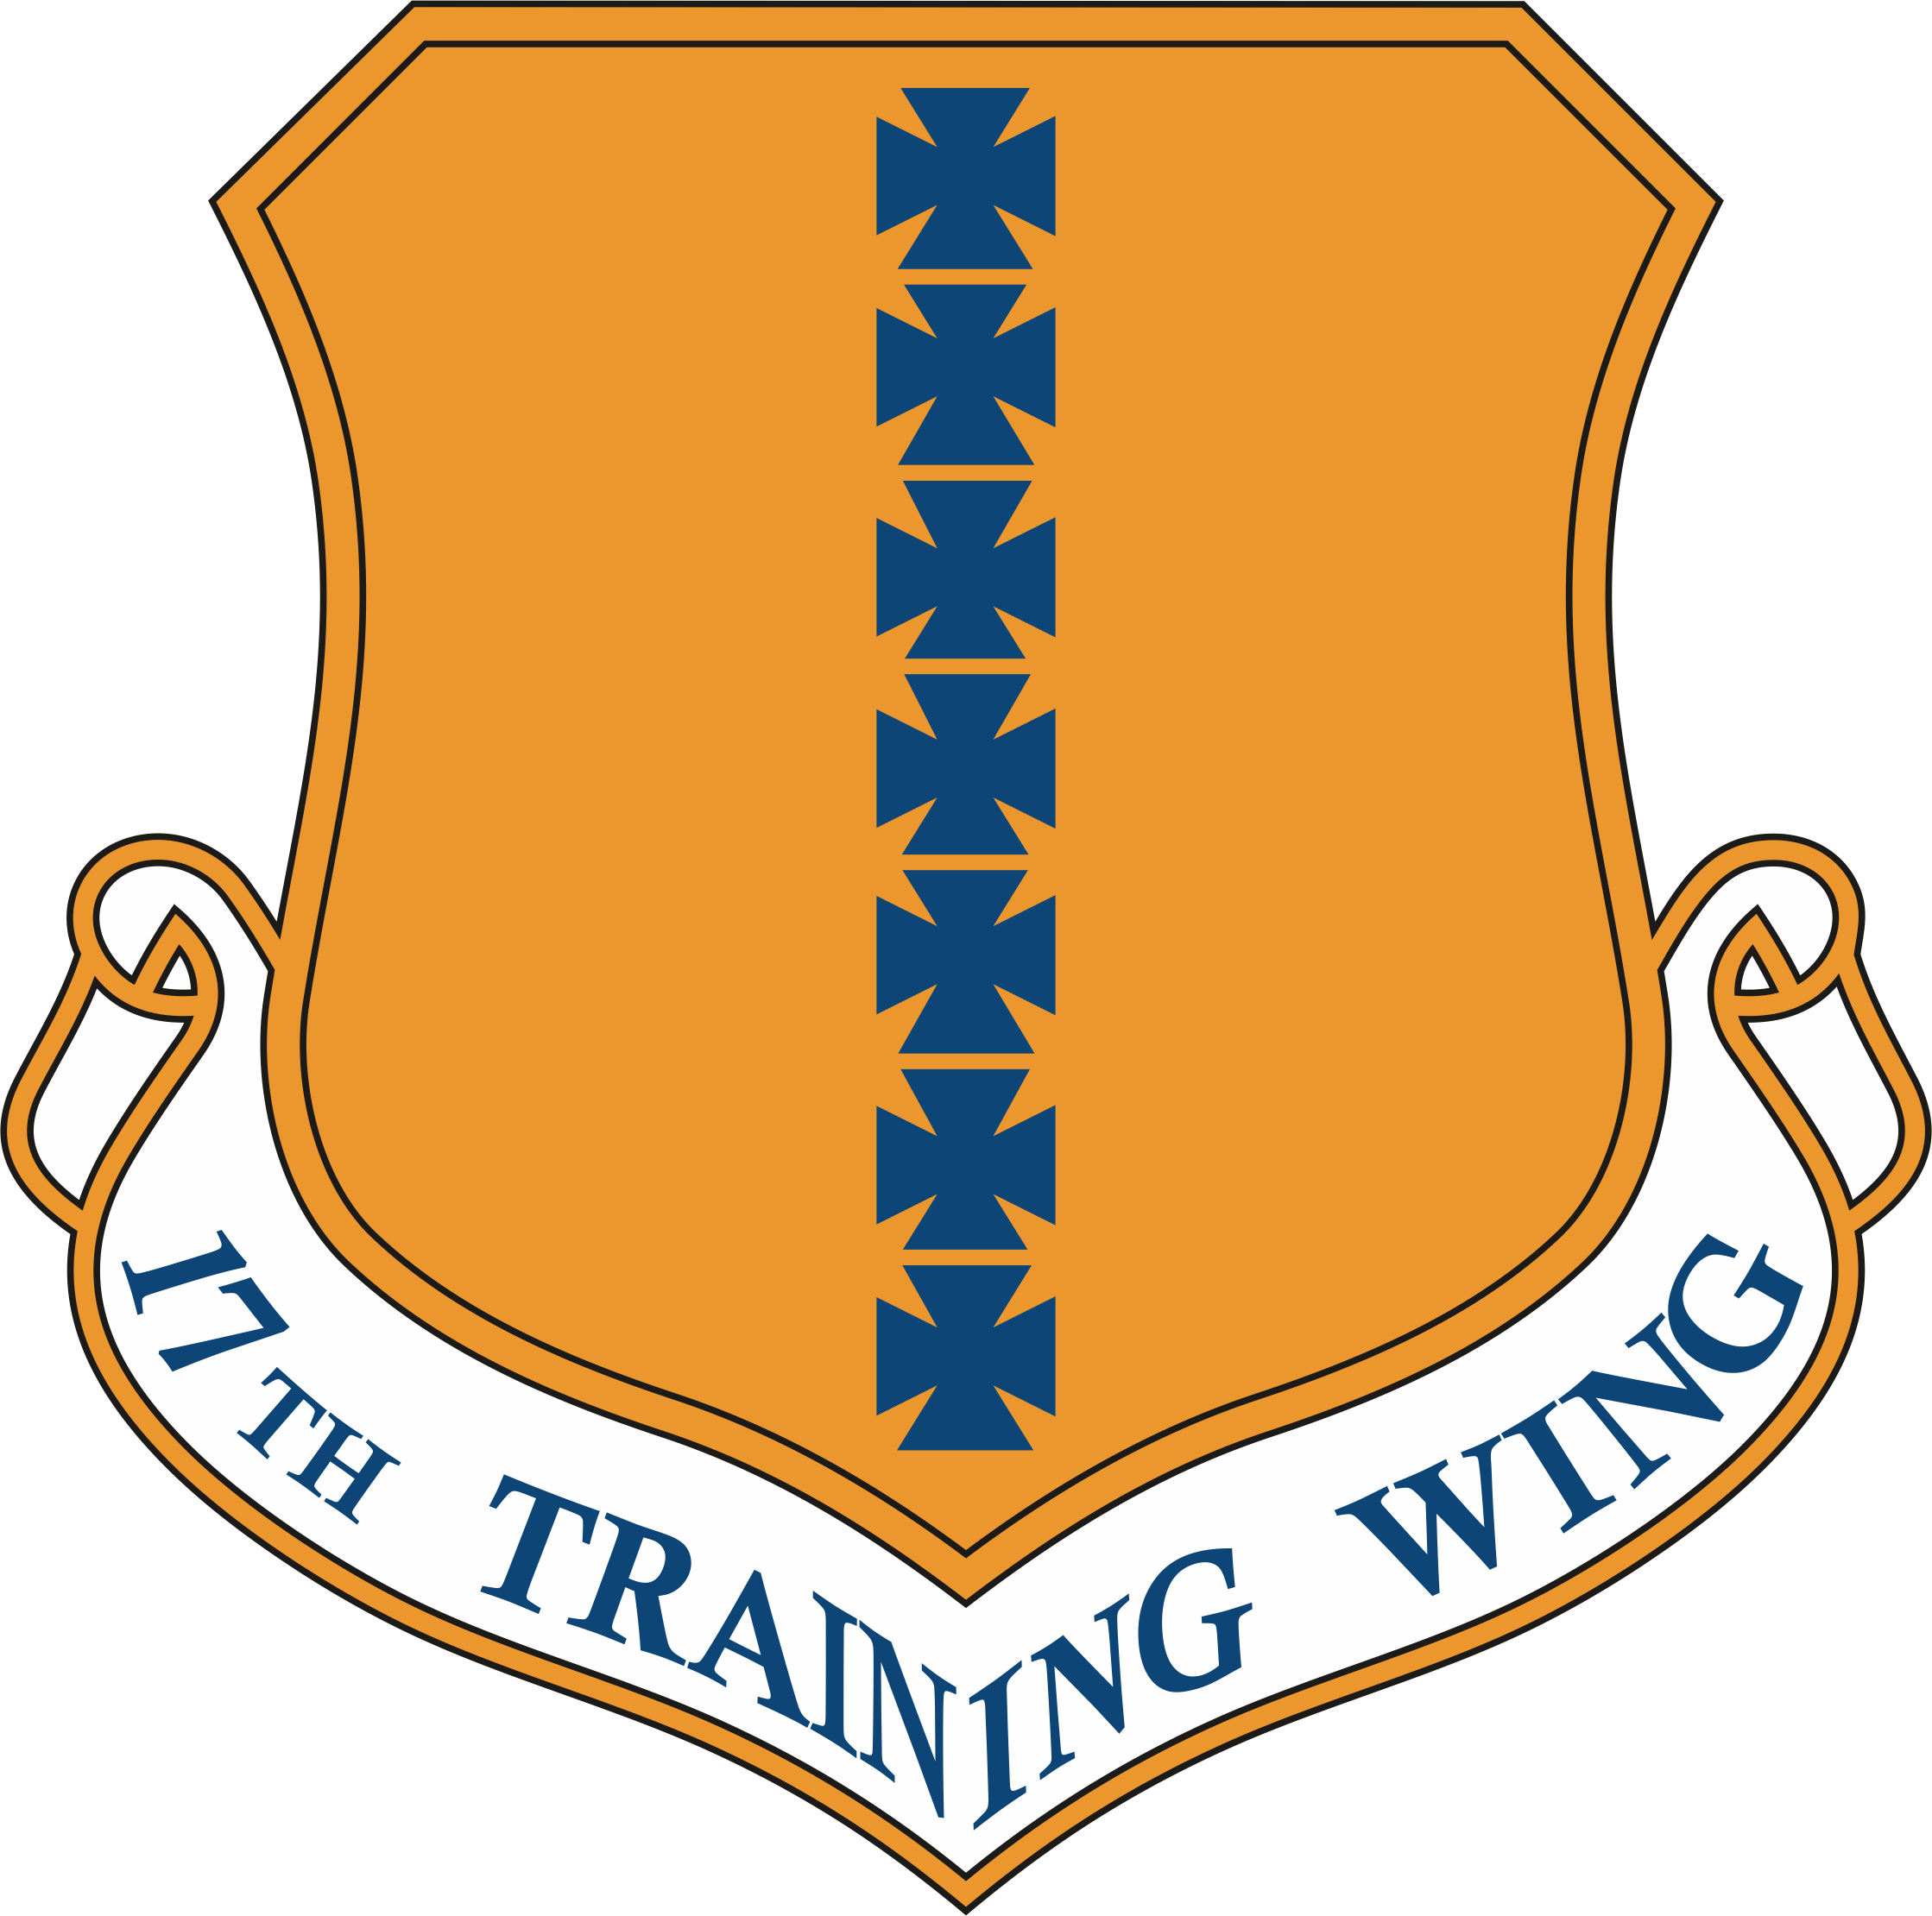 17th Training Wing SVG